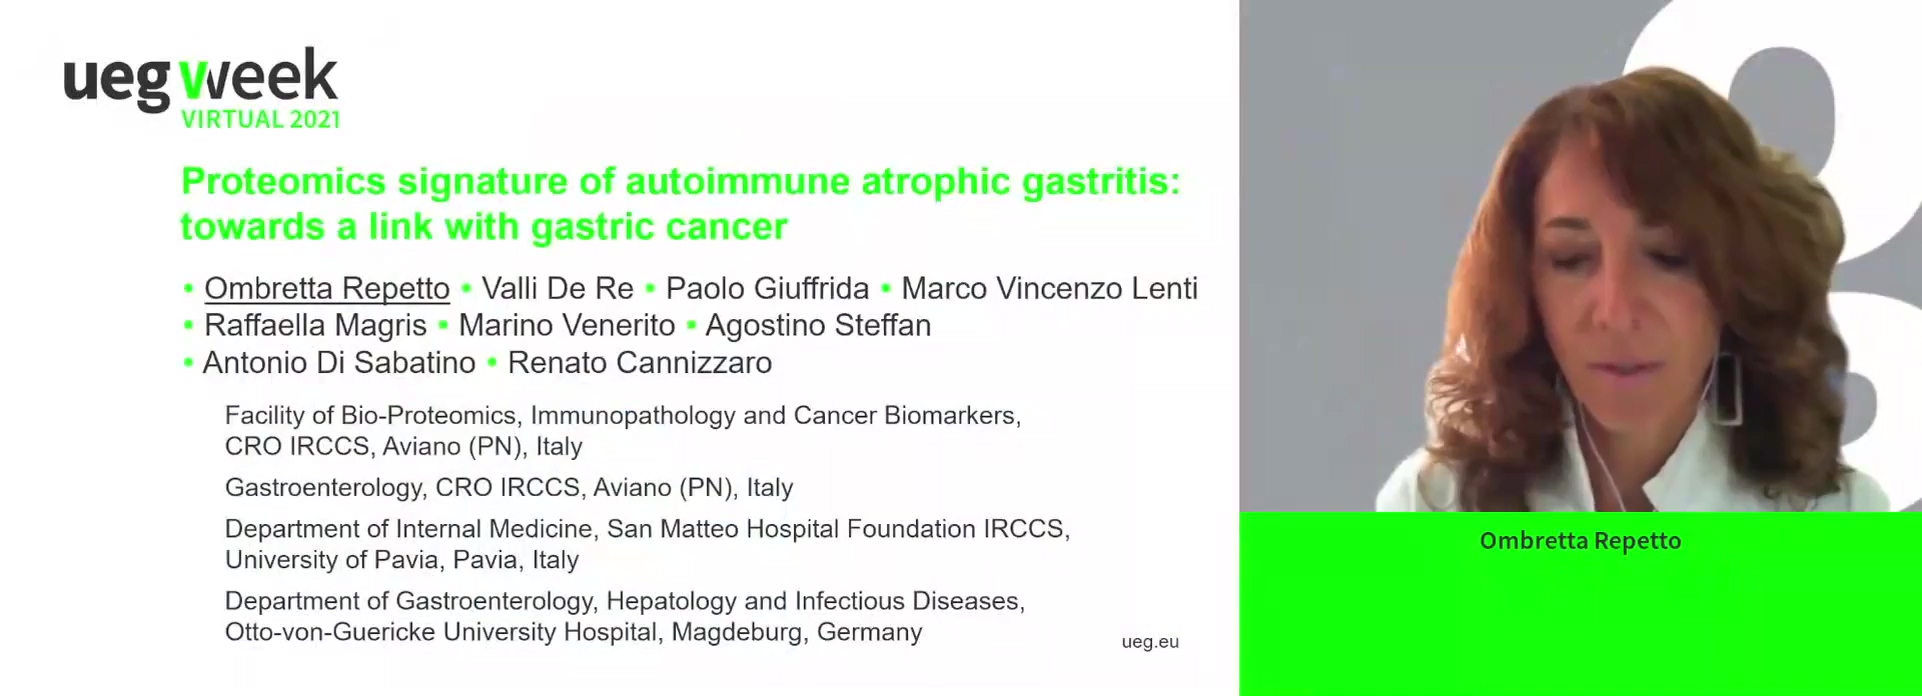 PROTEOMICS SIGNATURE OF AUTOIMMUNE ATROPHIC GASTRITIS: TOWARDS A LINK WITH GASTRIC CANCER